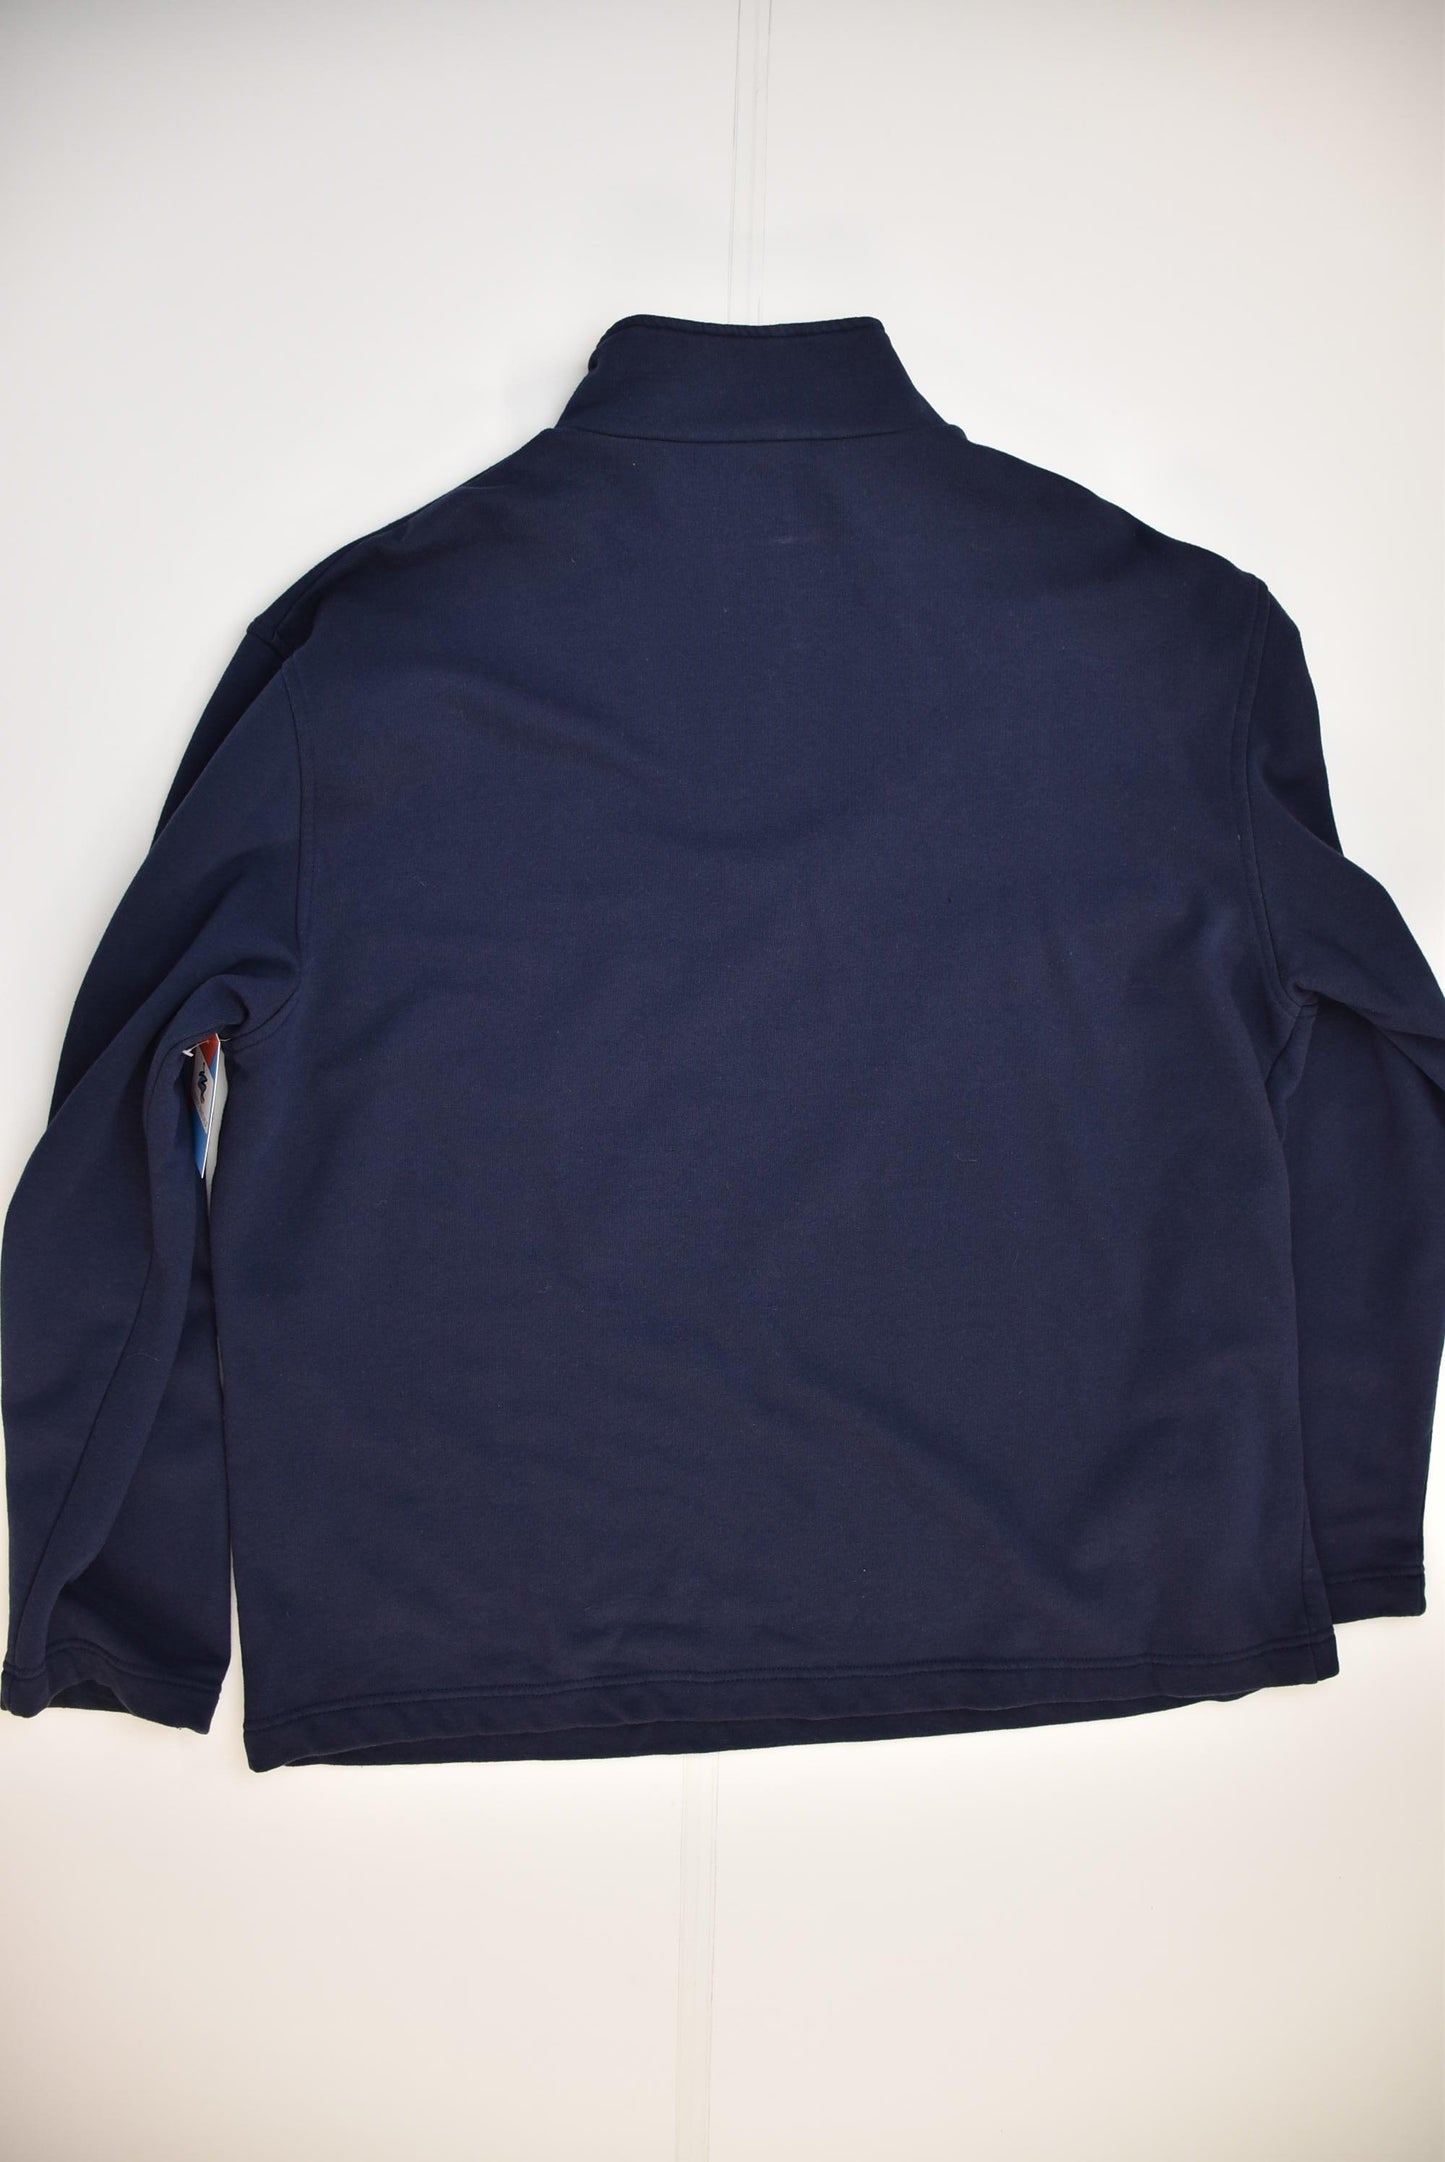 Fila 1/4 Zip Sweatshirt (XL) - Slayyy Vintage